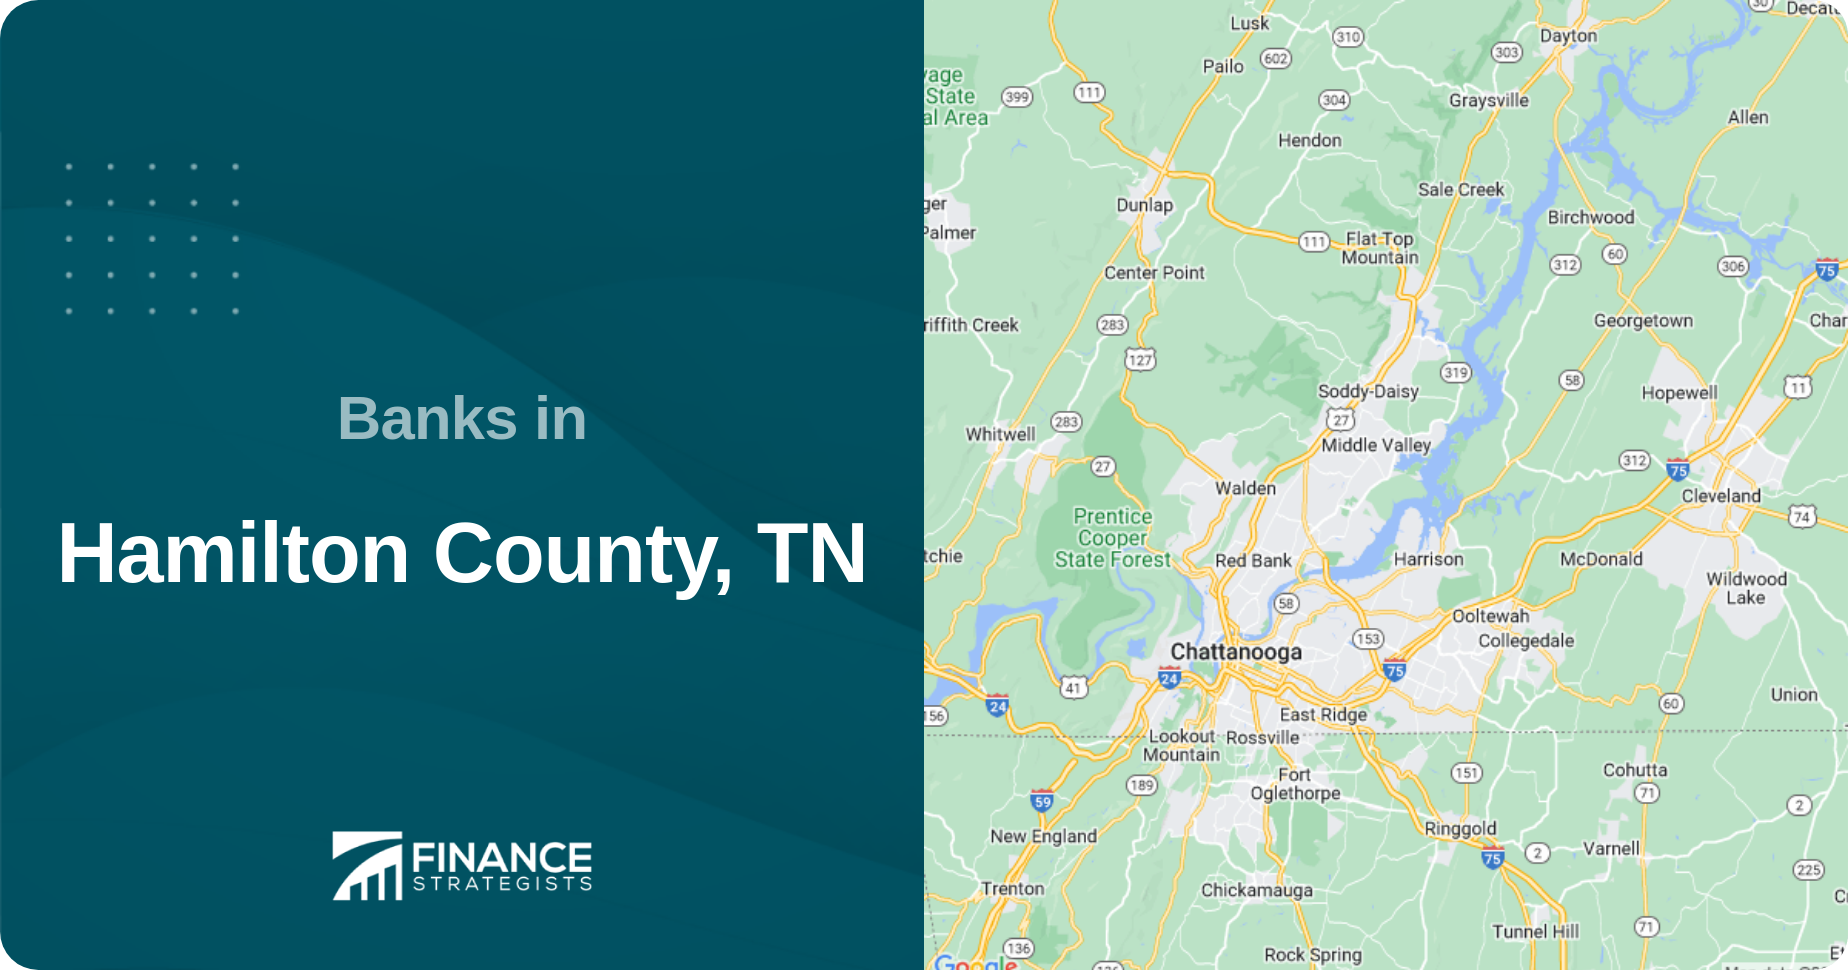 Banks in Hamilton County, TN